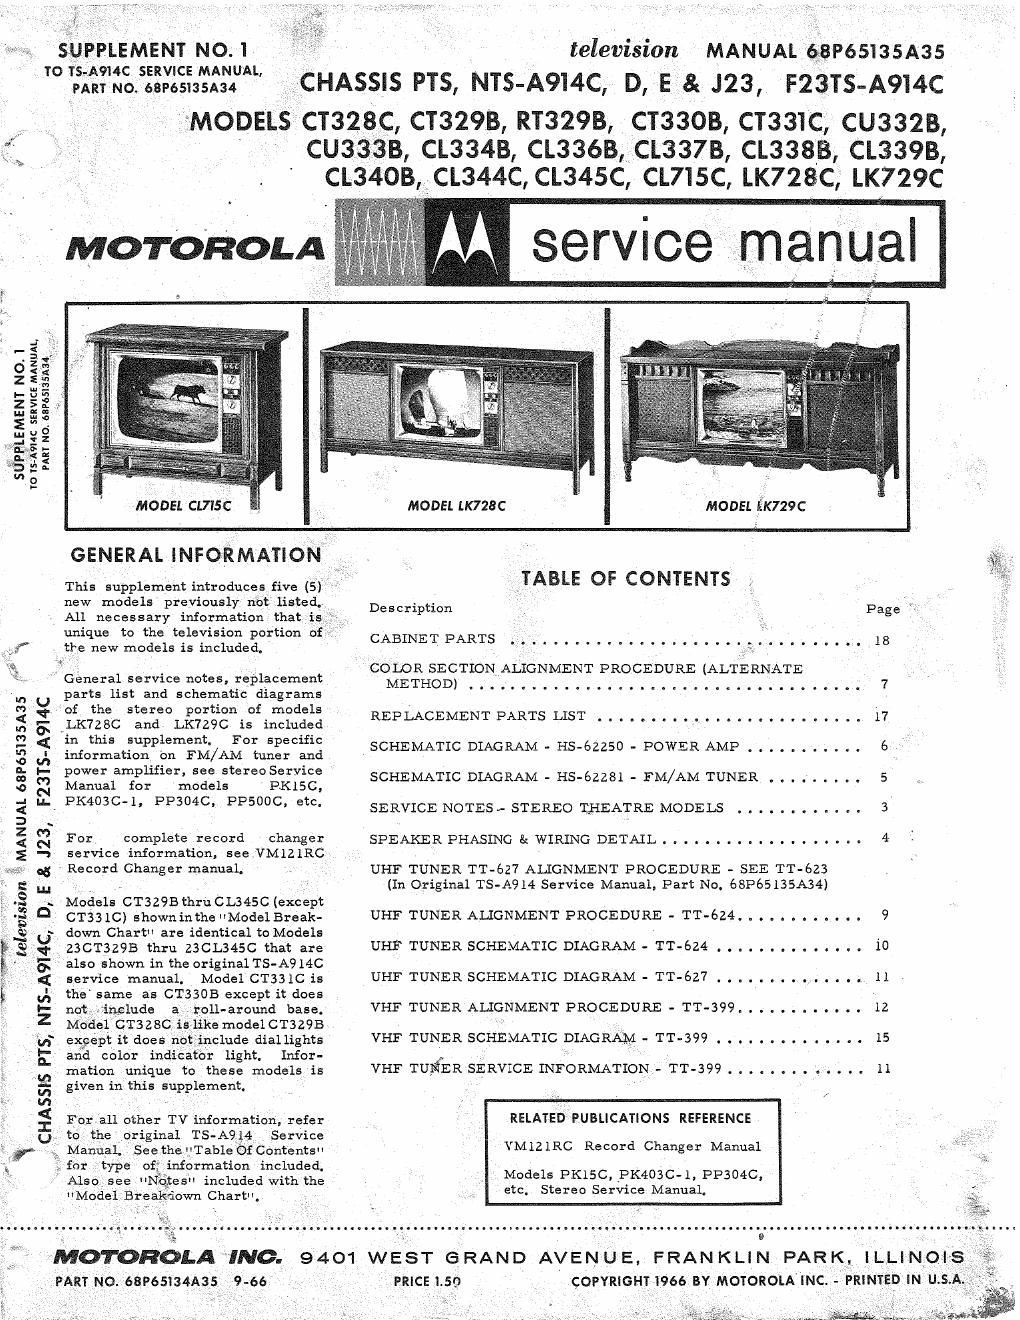 motorola cl 339 b service manual